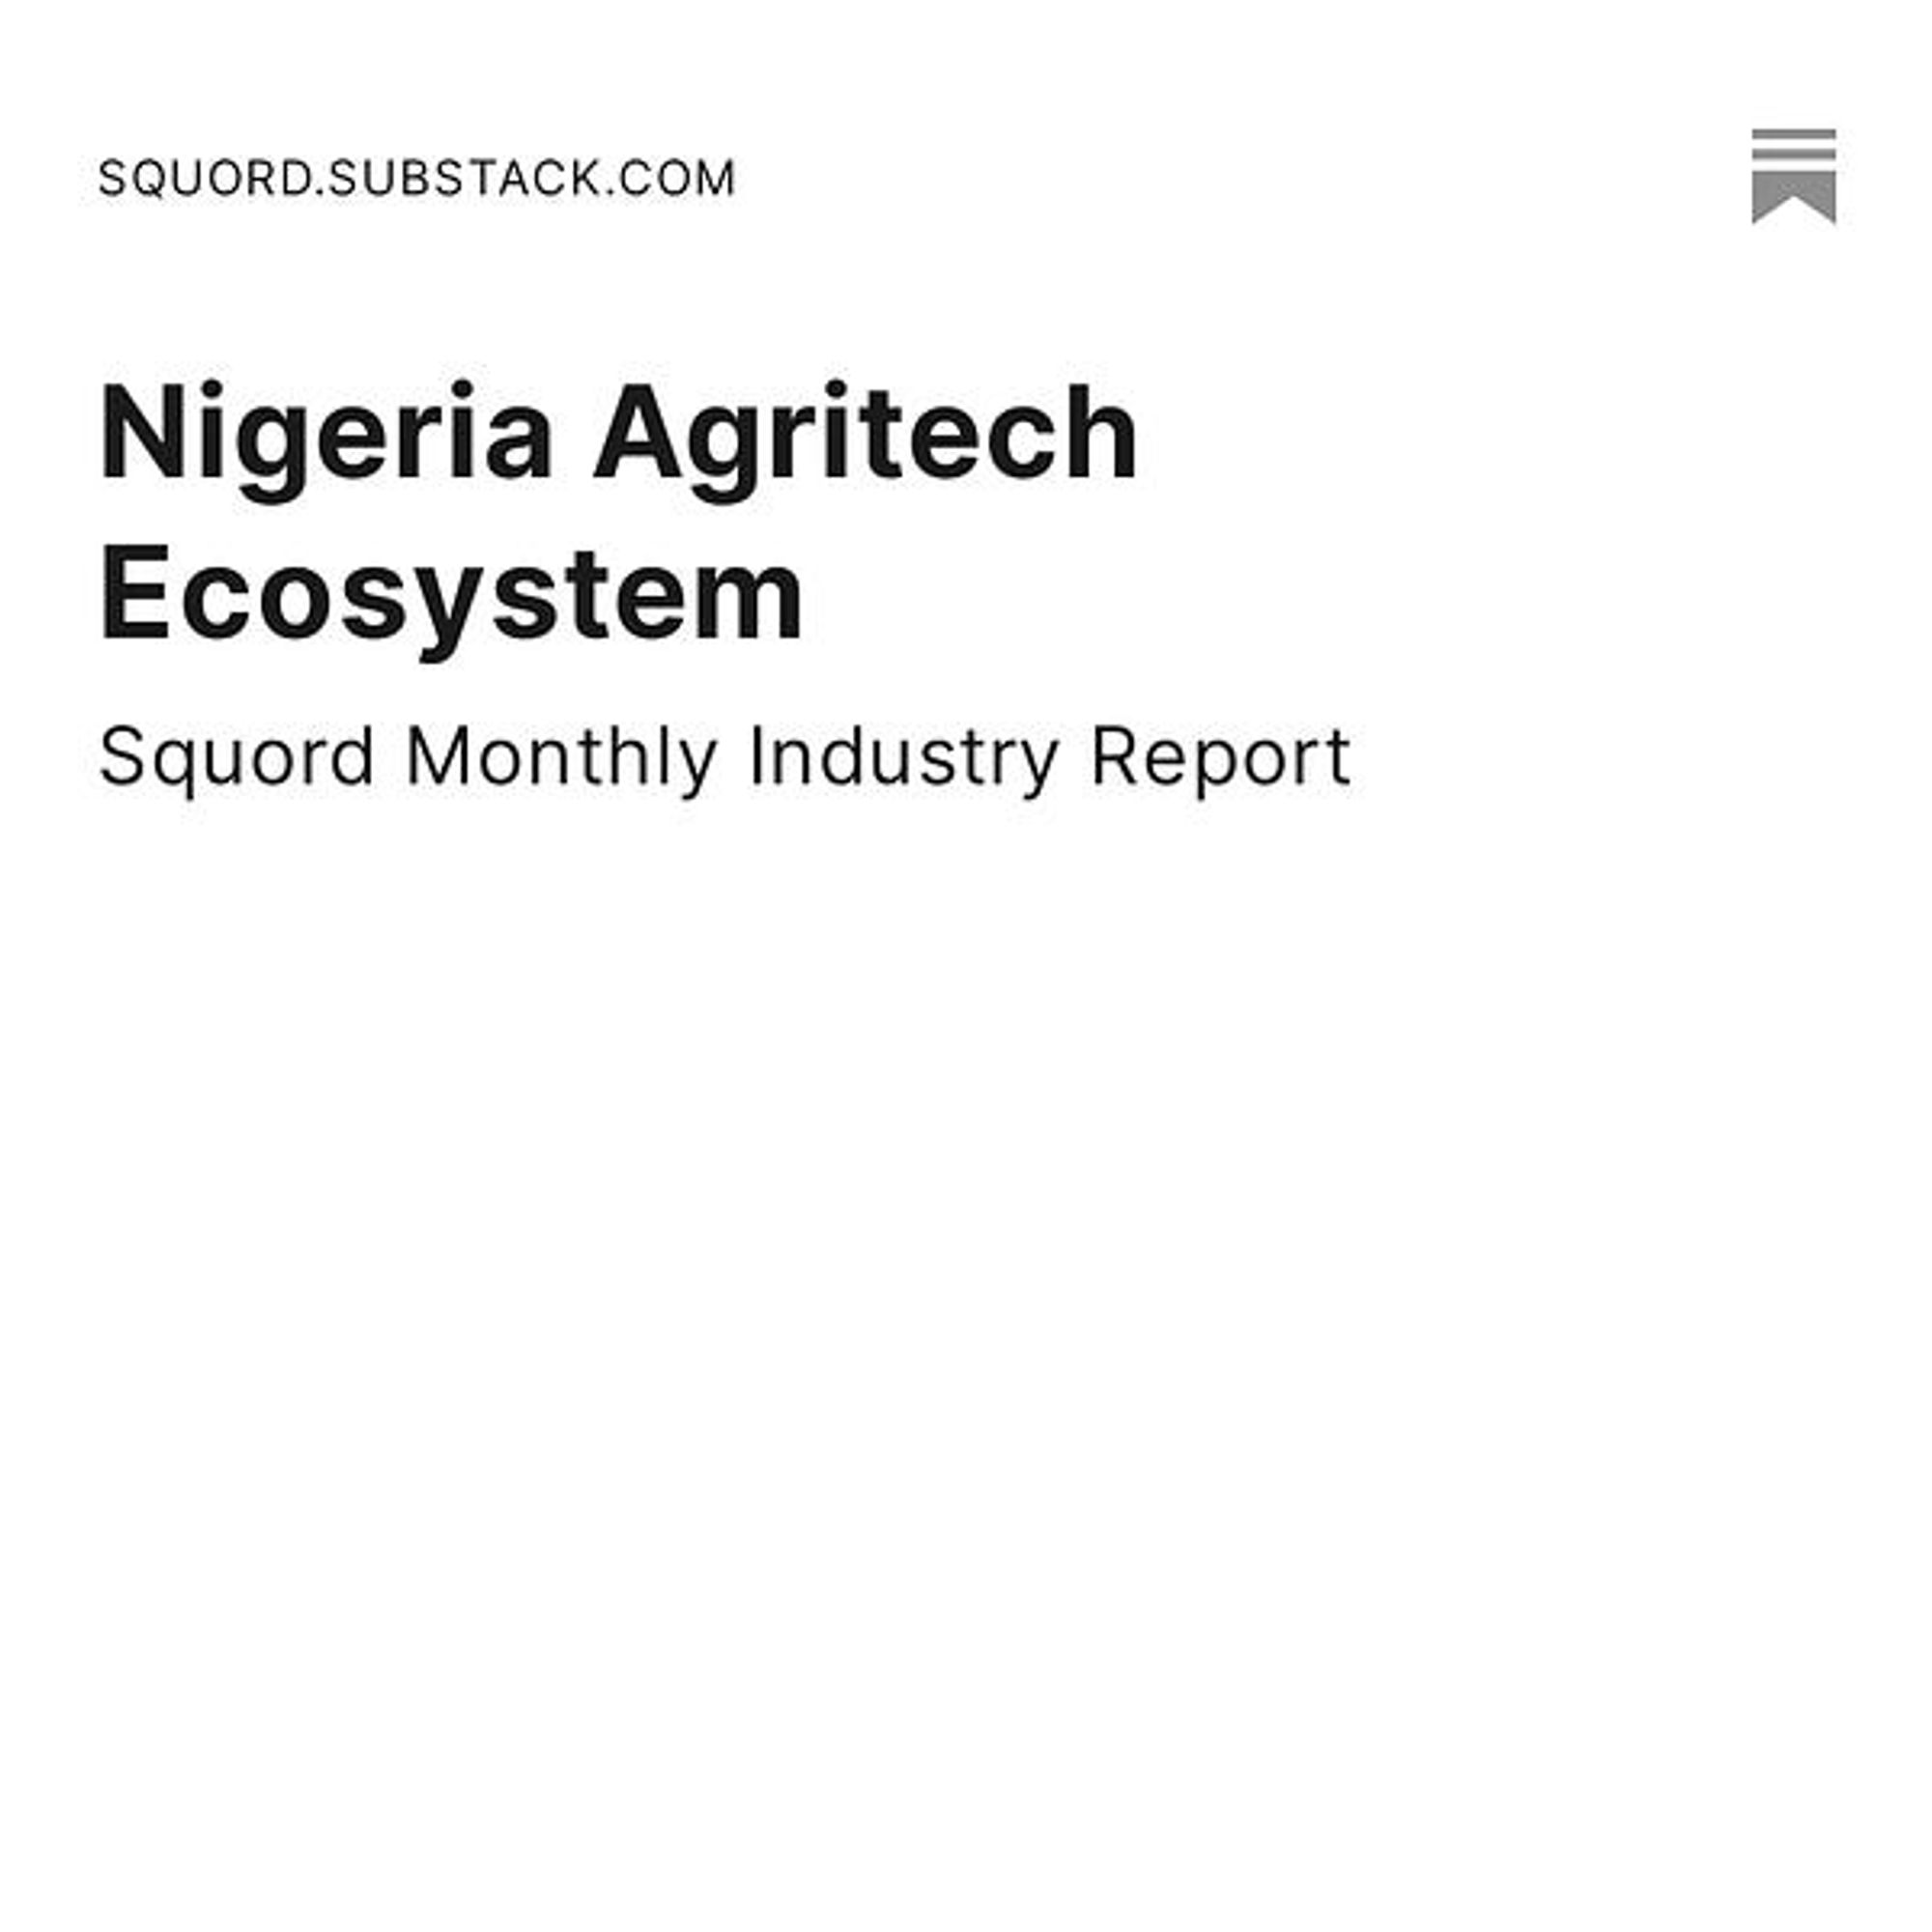 Nigeria Agritech Ecosystem